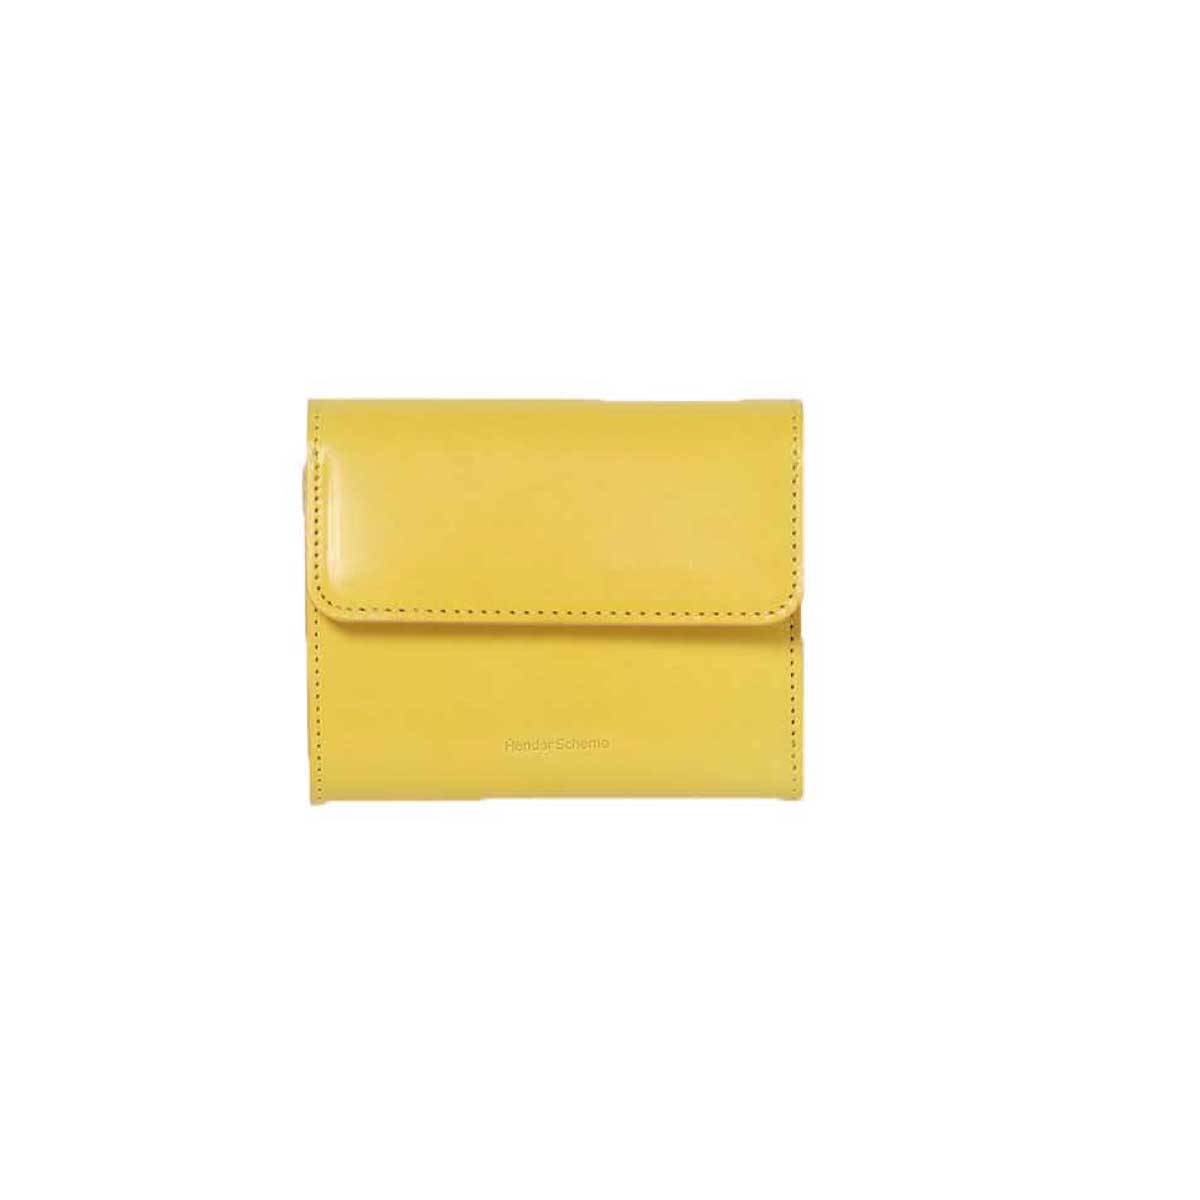 Hender Scheme / bellows wallet (Yellow)